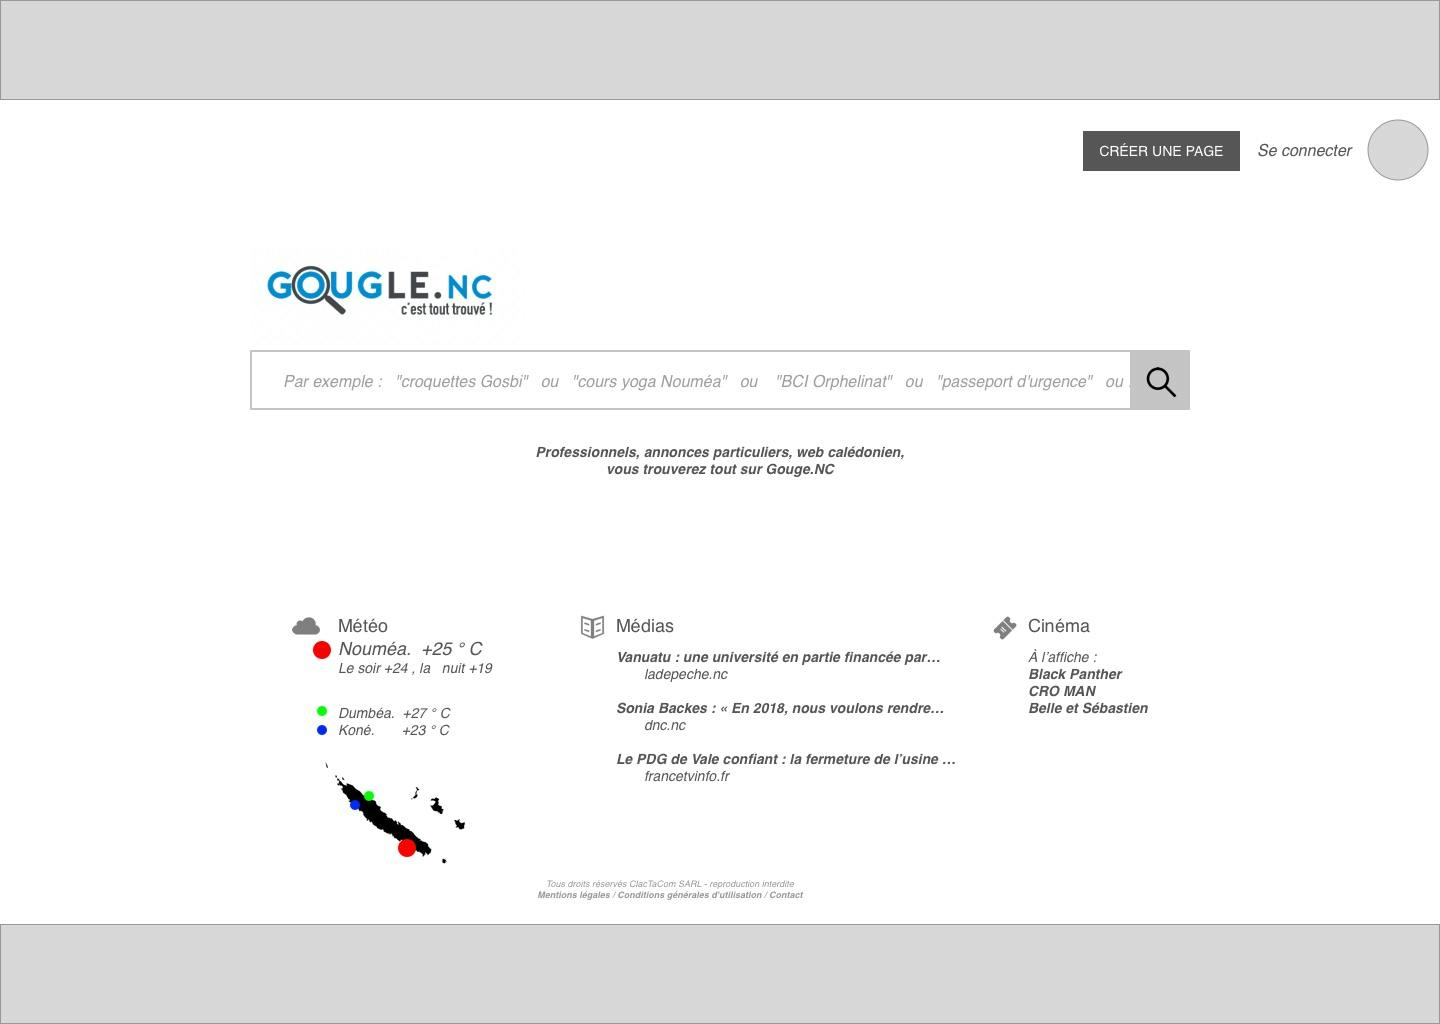 Gougle.nc redesign welcome screen